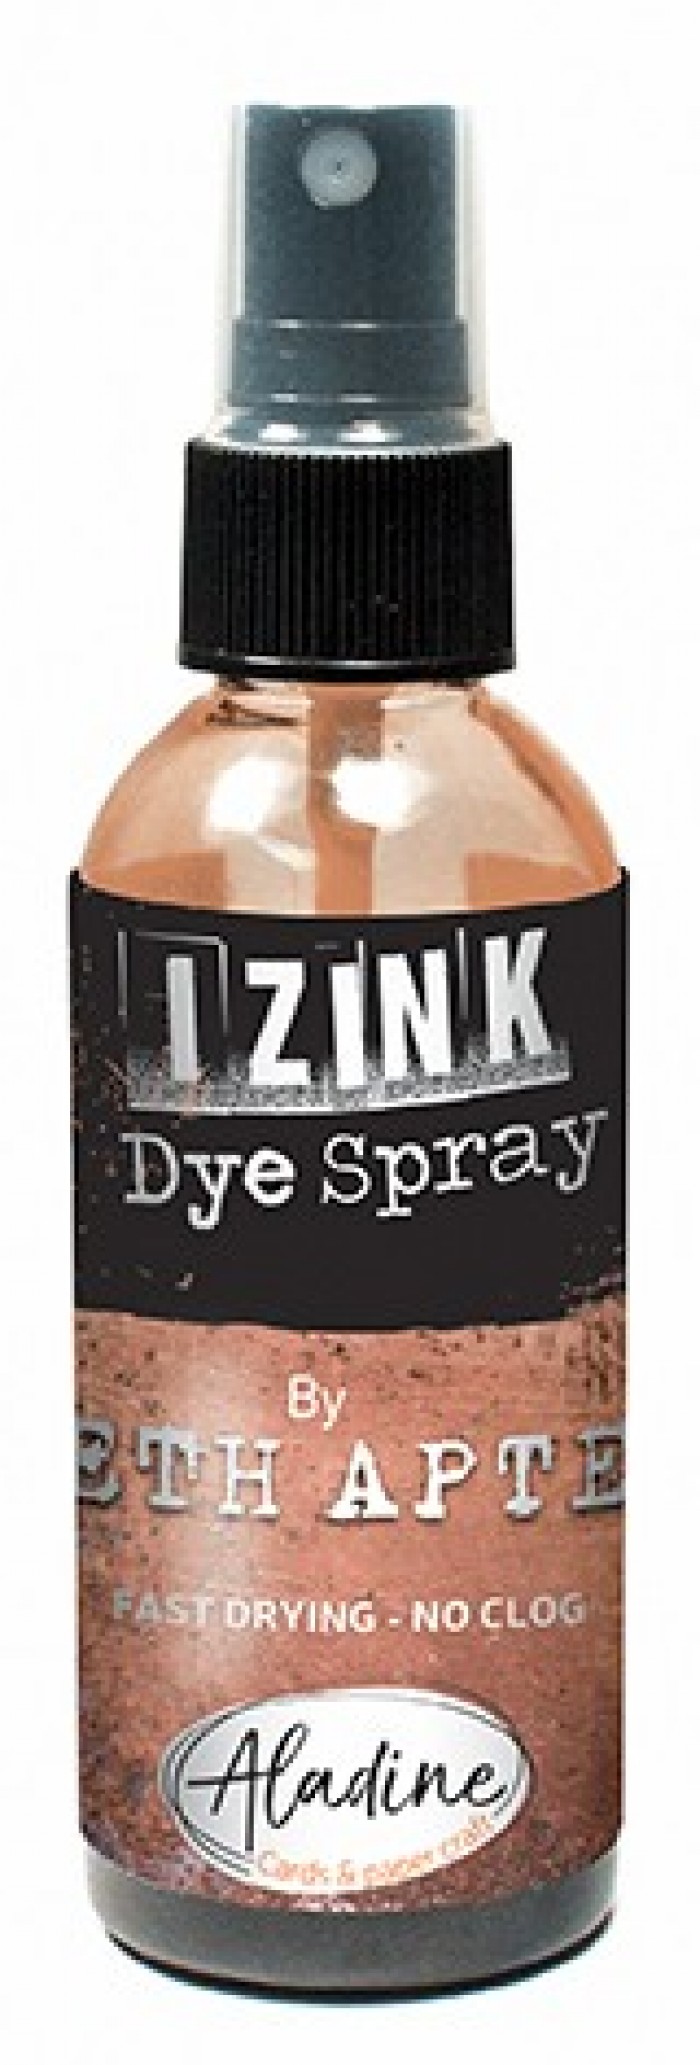 Cuivre - Copper  Izink Dye Spray by Seth Apter